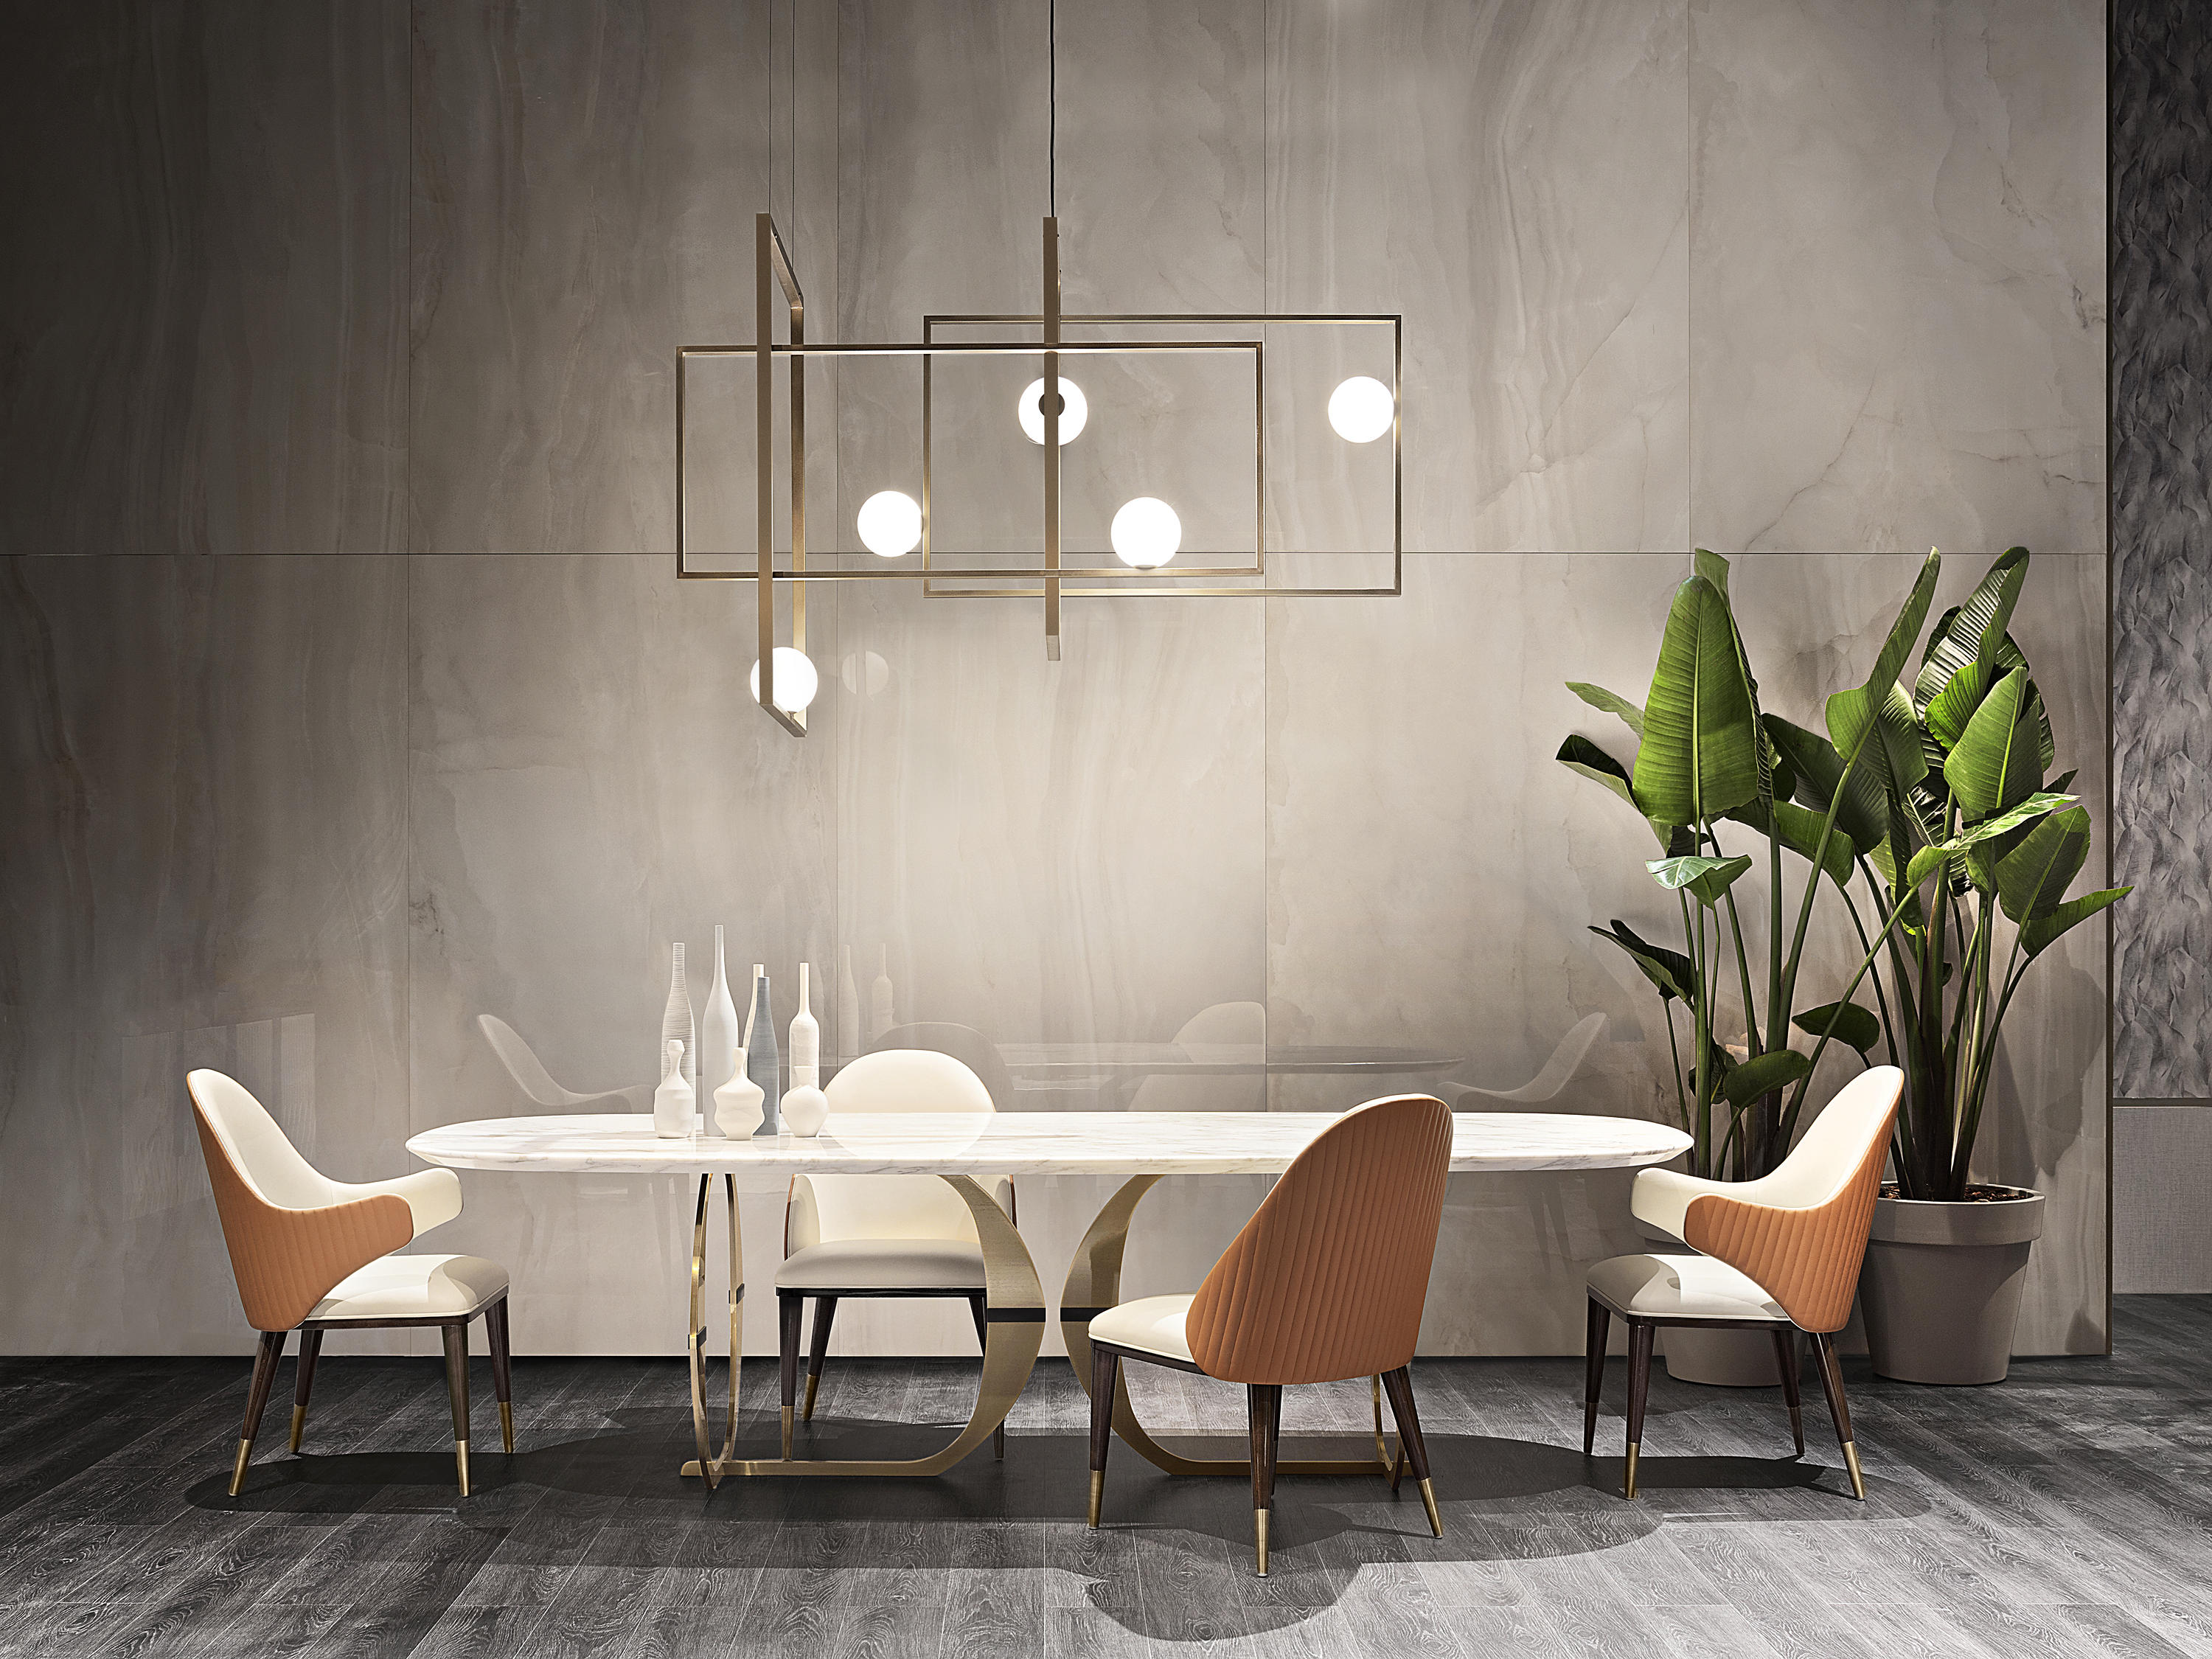 Convivio Dining Table & designer furniture | Architonic